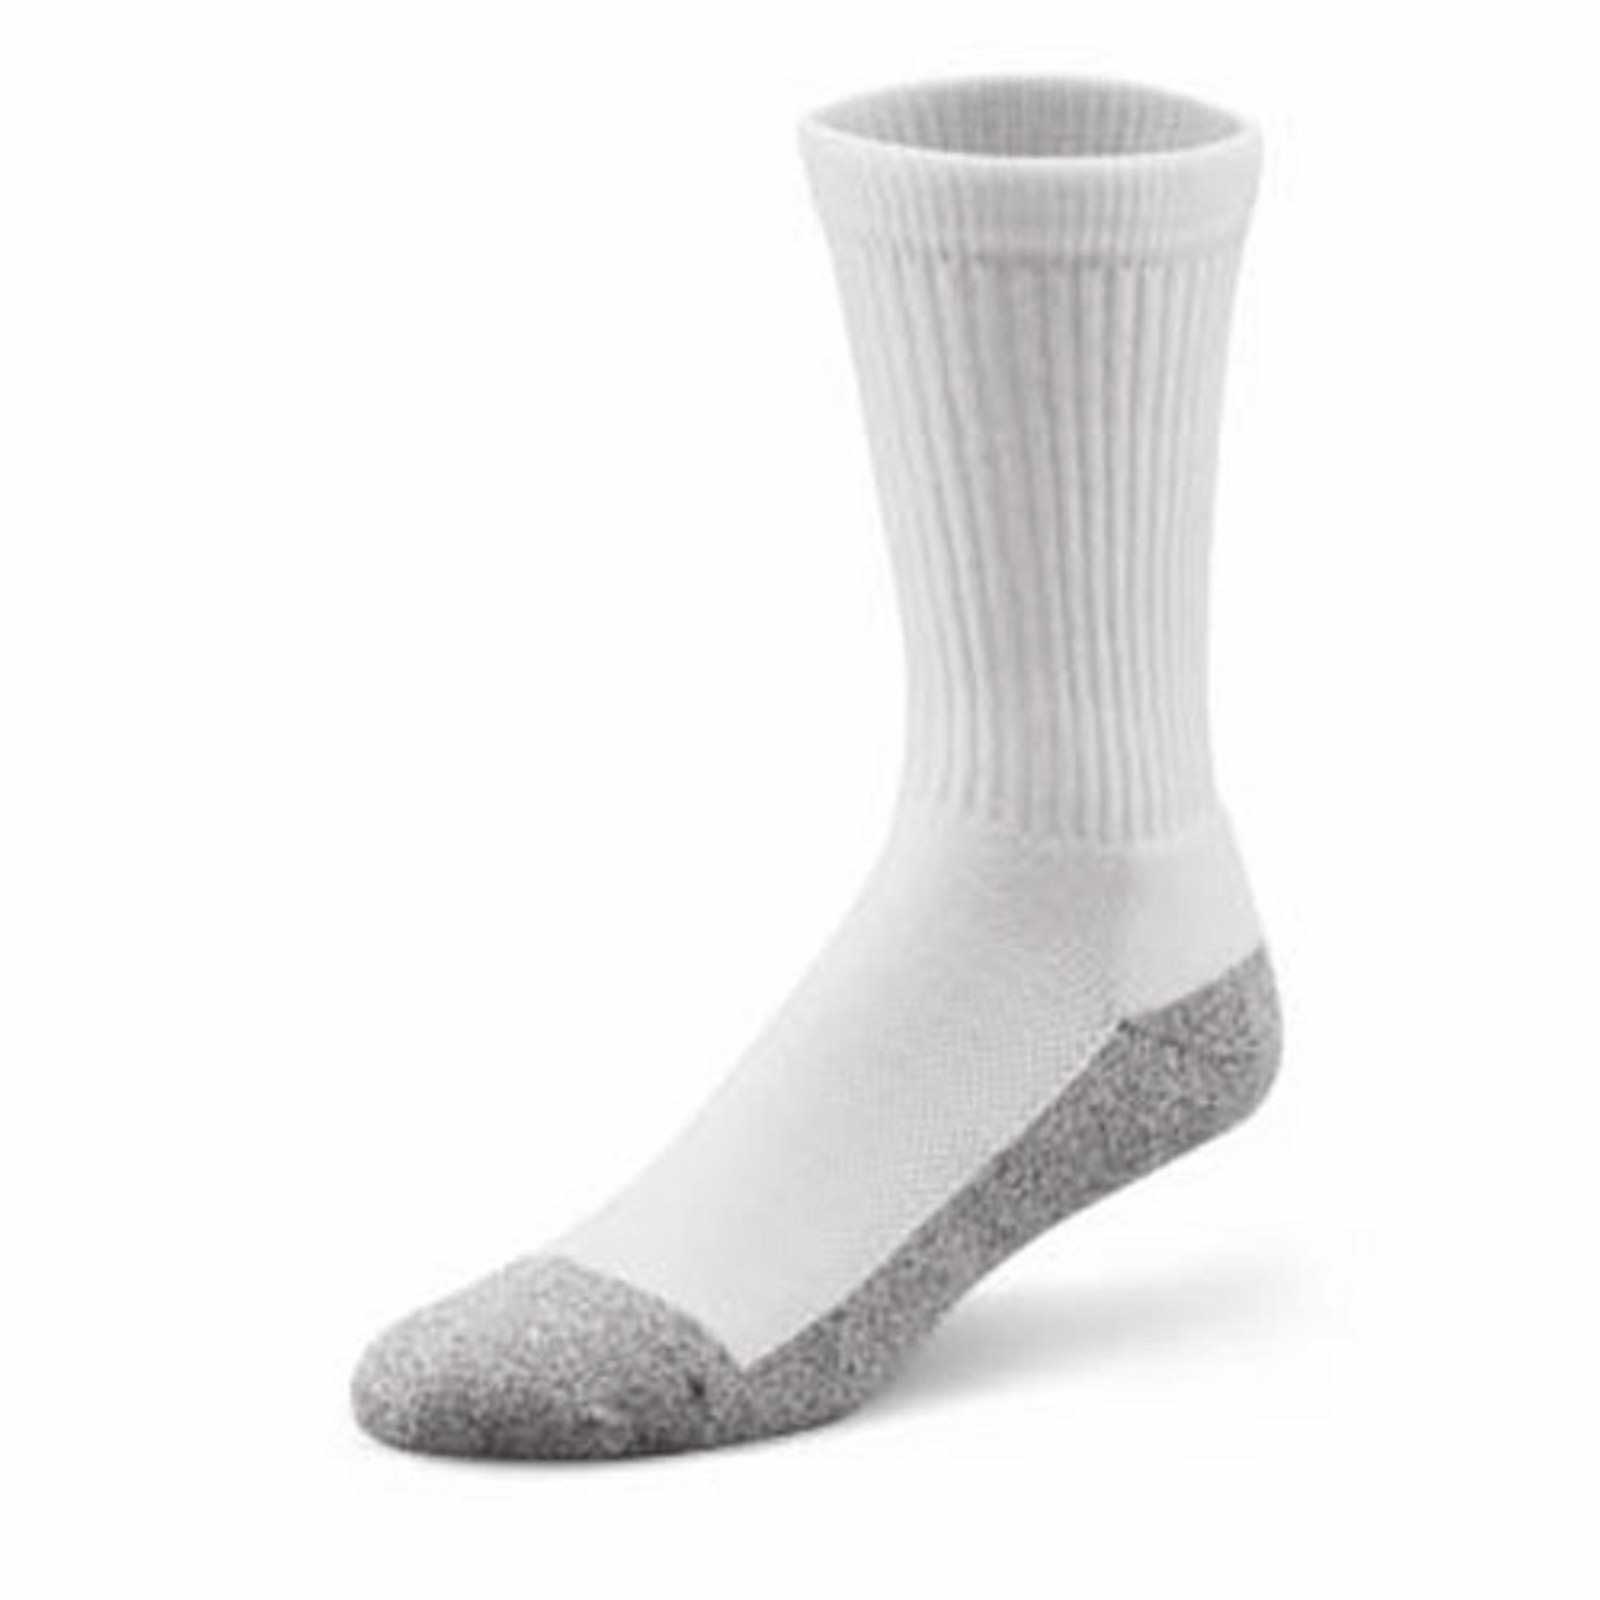 Dr. Comfort Extra-Roomy Socks (1 Pair) - Men's Therapeutic Diabetic Socks - Athletic, Casual, Dress